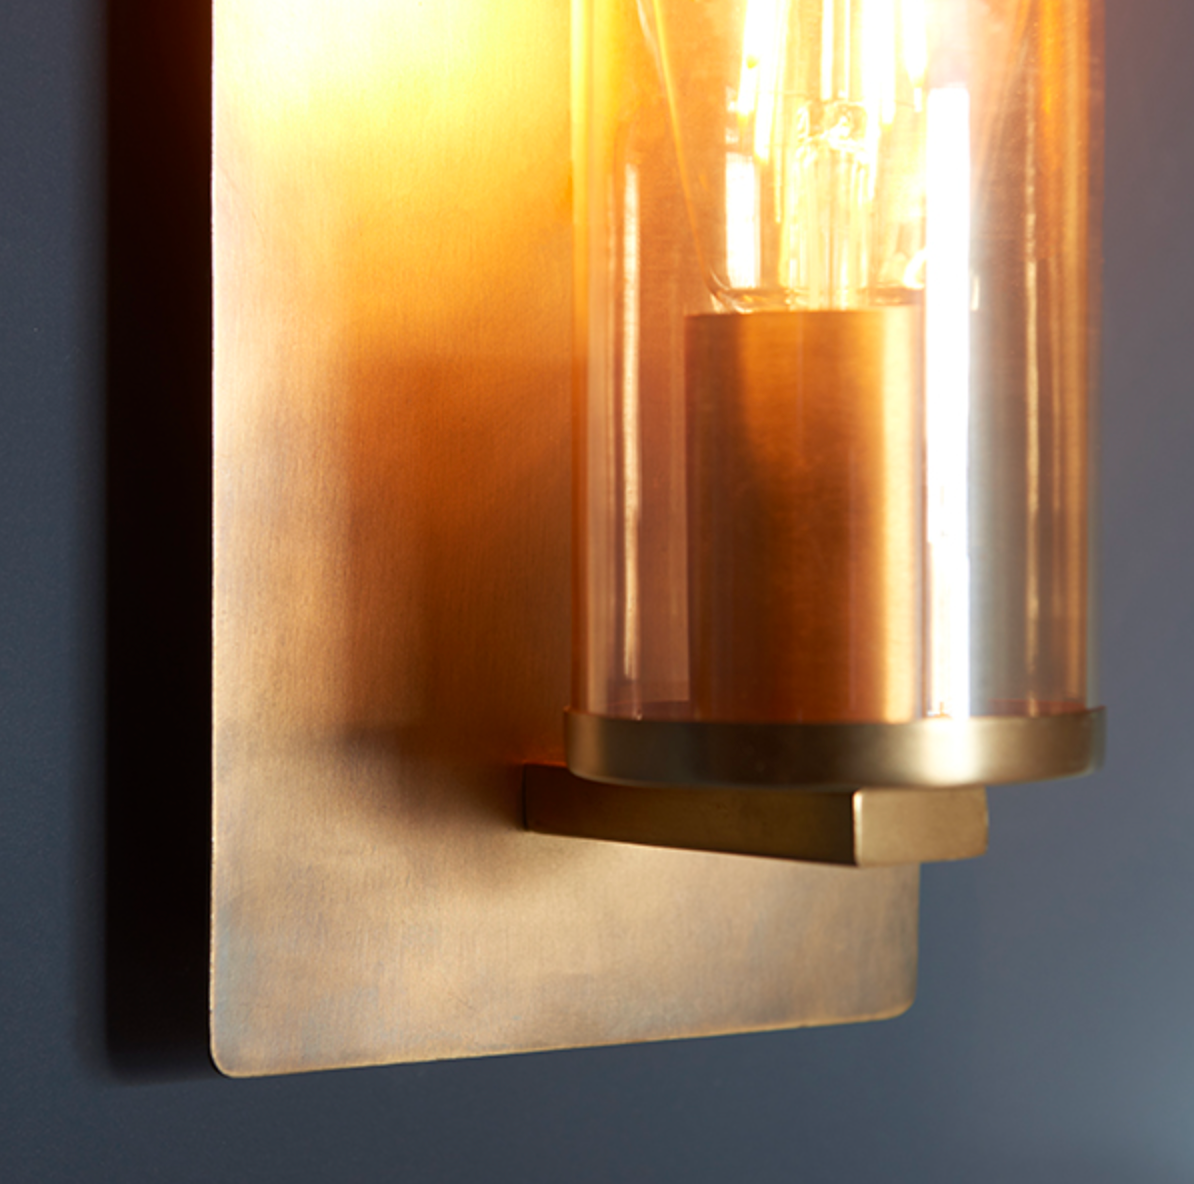 Brass Patina & Champagne Lustre Glass Wall Light - ID 11109